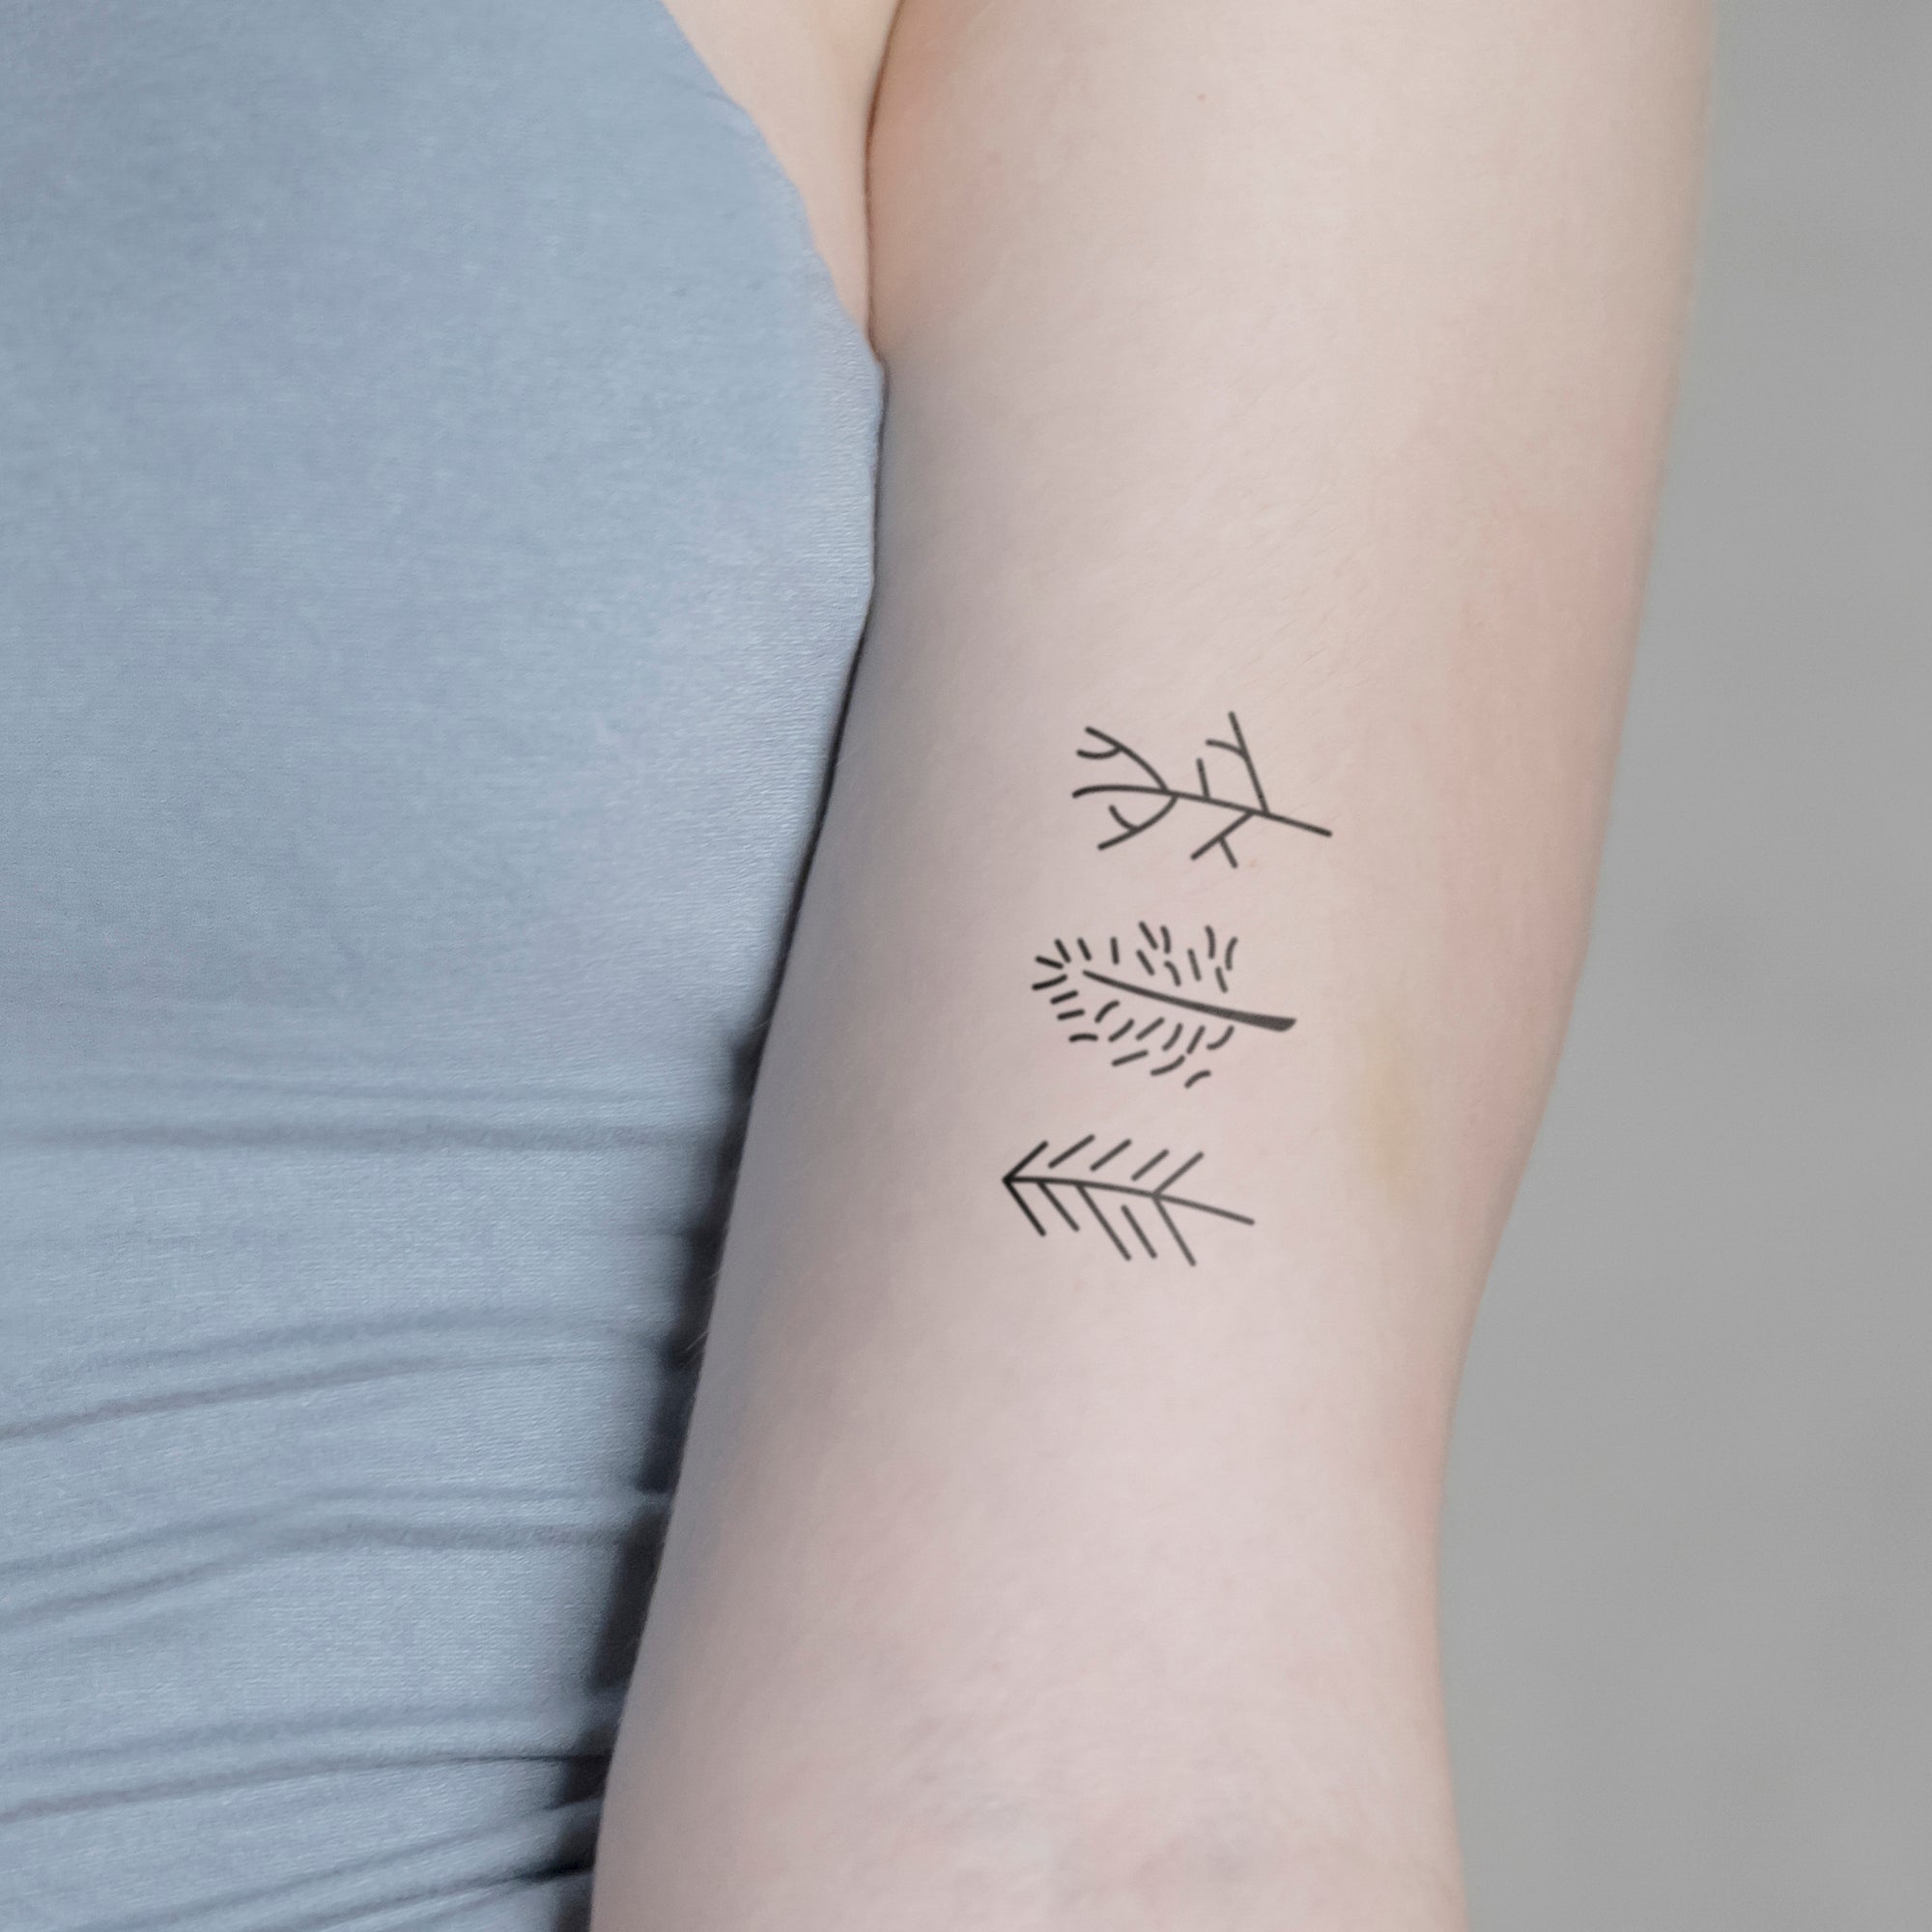 Simple arrow forearm tattoo - Tattoogrid.net